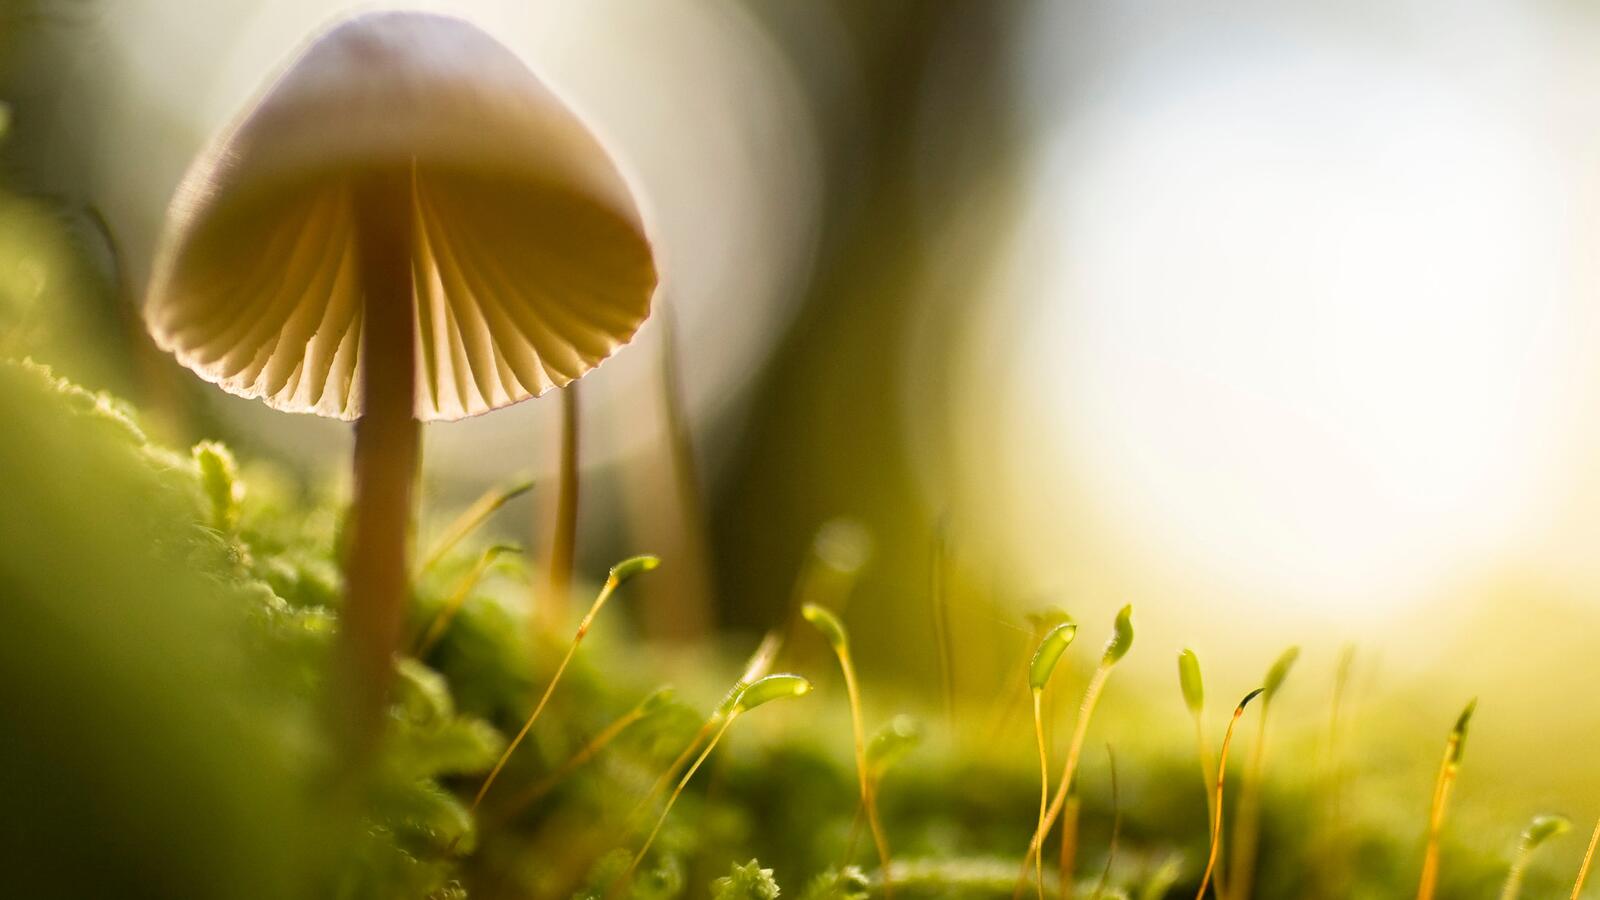 Wallpapers mushroom photografie blurred on the desktop